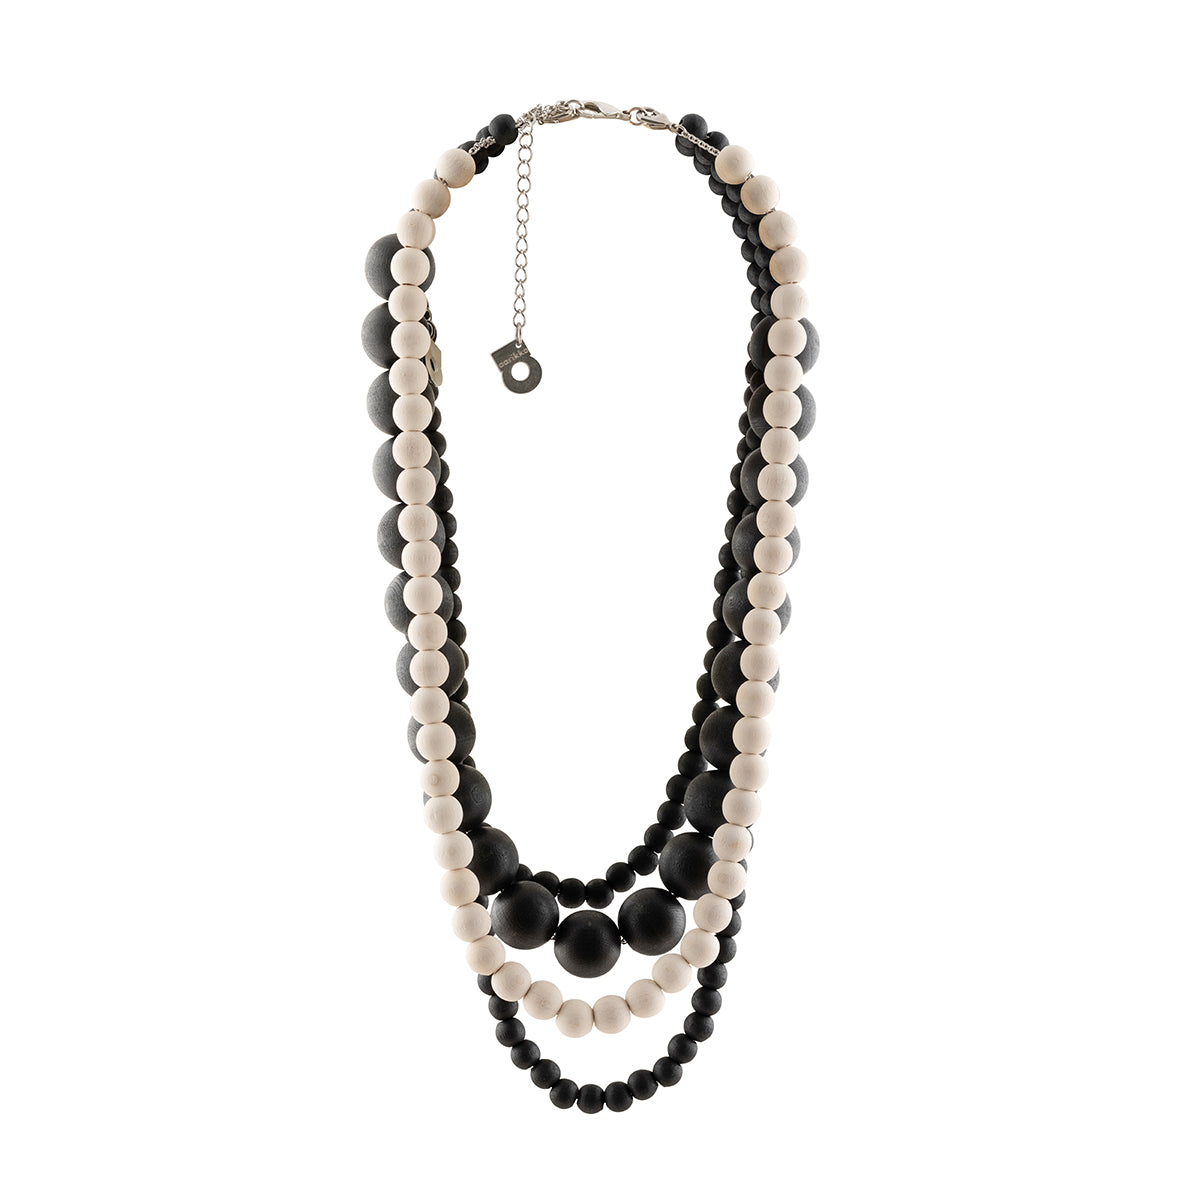 Lehto necklace, black and white